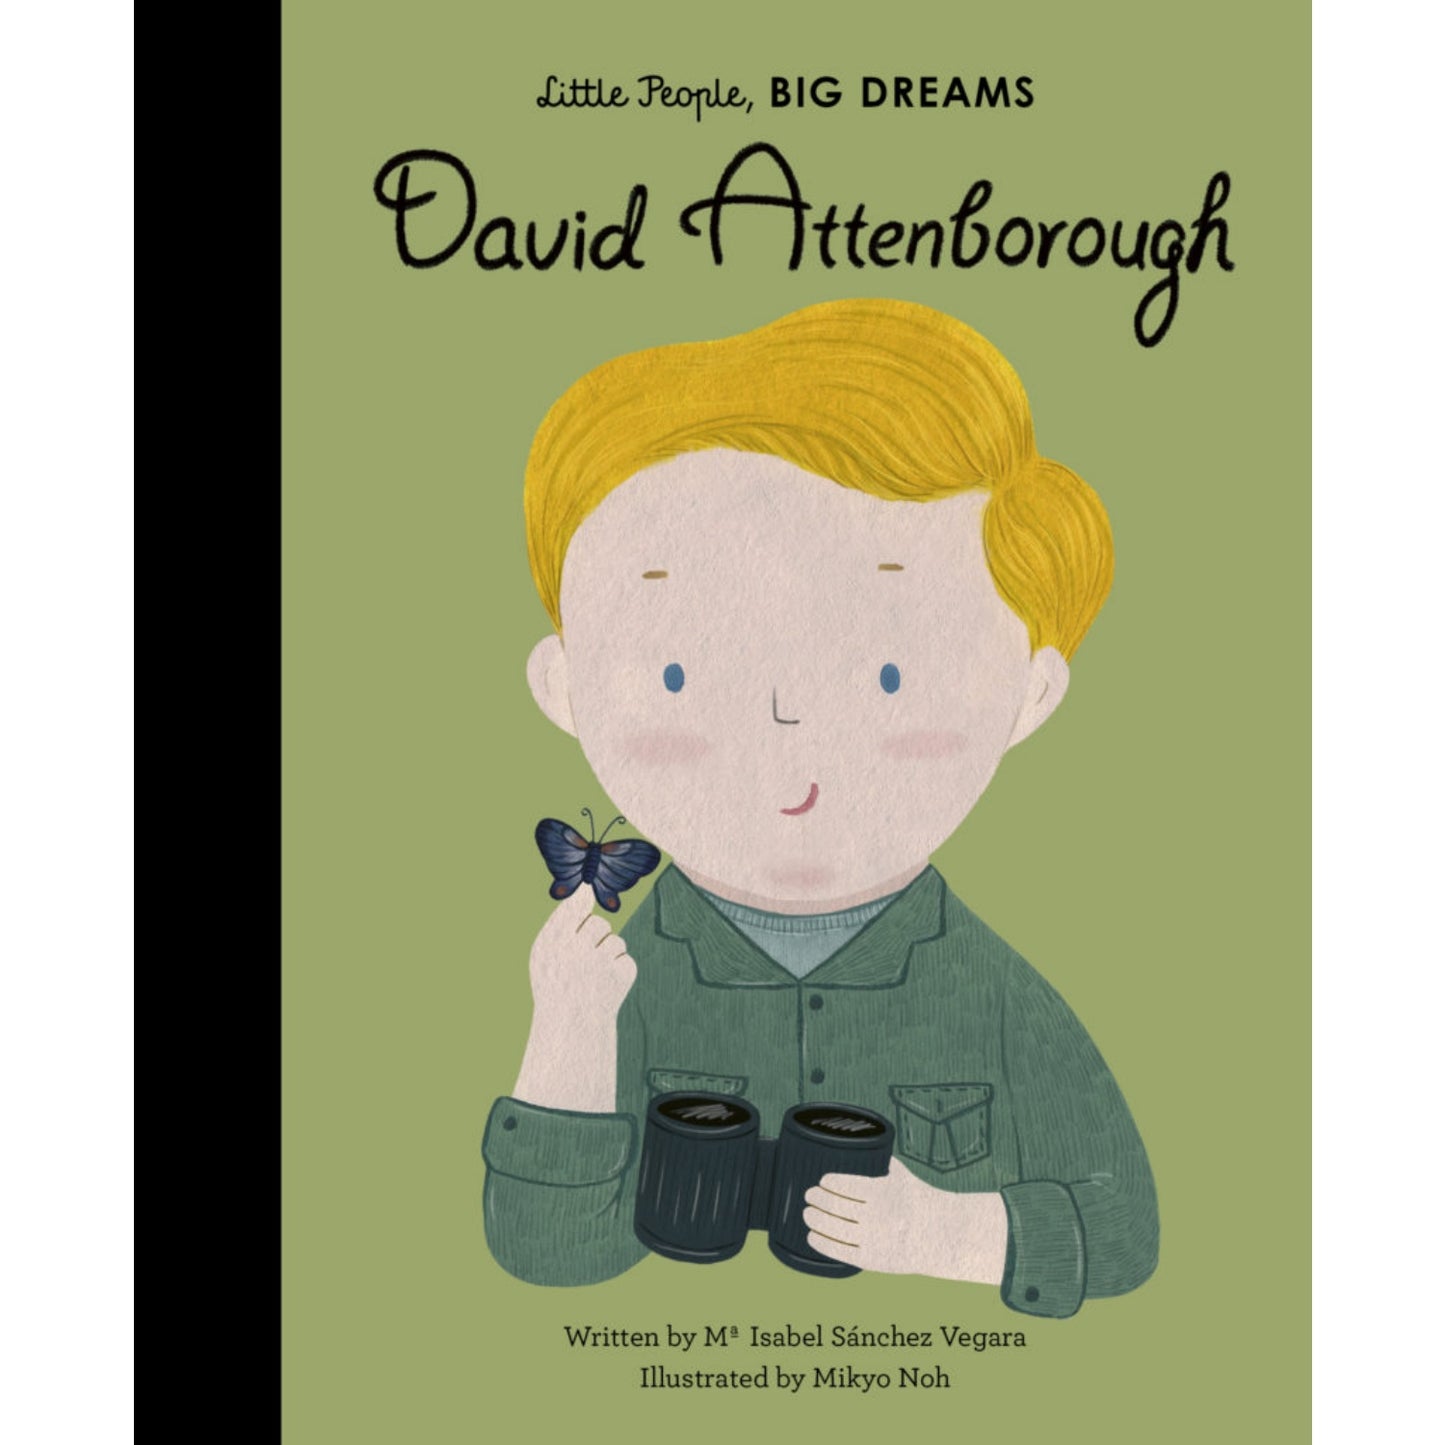 David Attenborough | Little People, BIG DREAMS | Children’s Book on Biographies